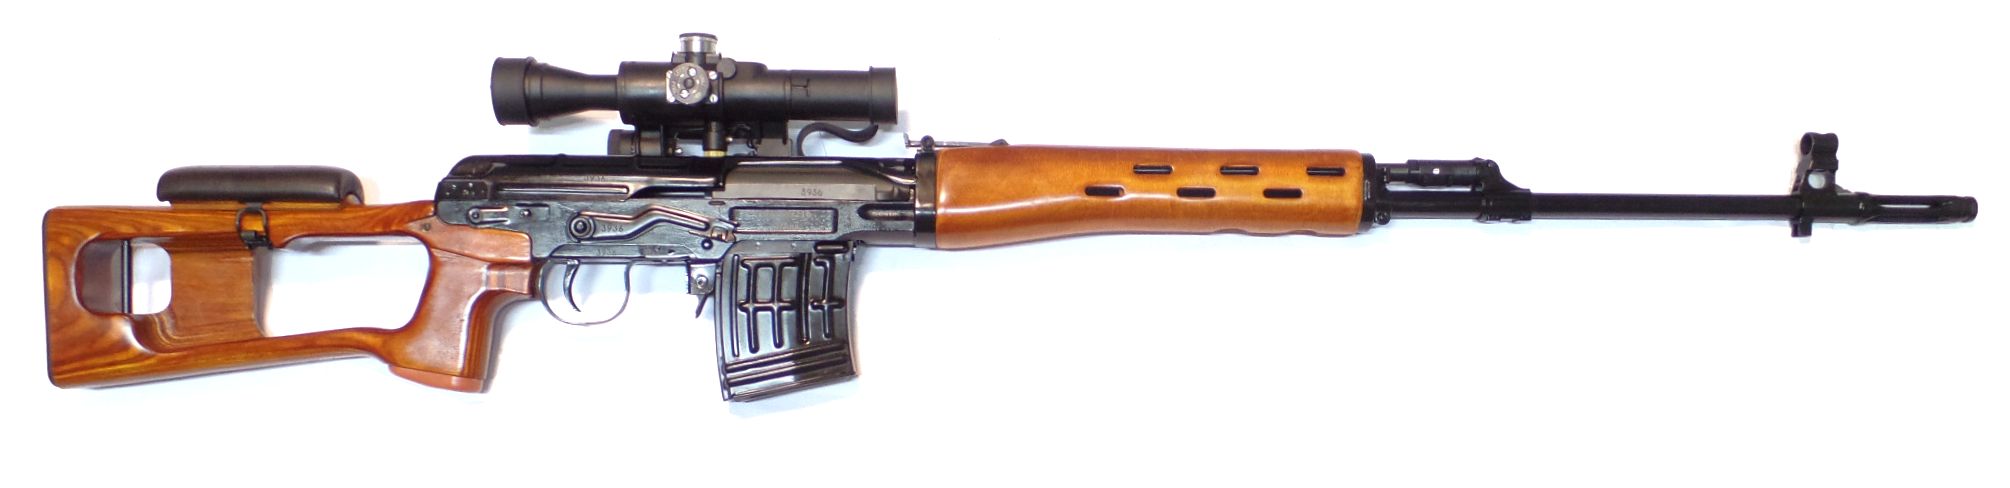 DRAGUNOV SVD calibre 7.62x54R REPETITION MANUELLE